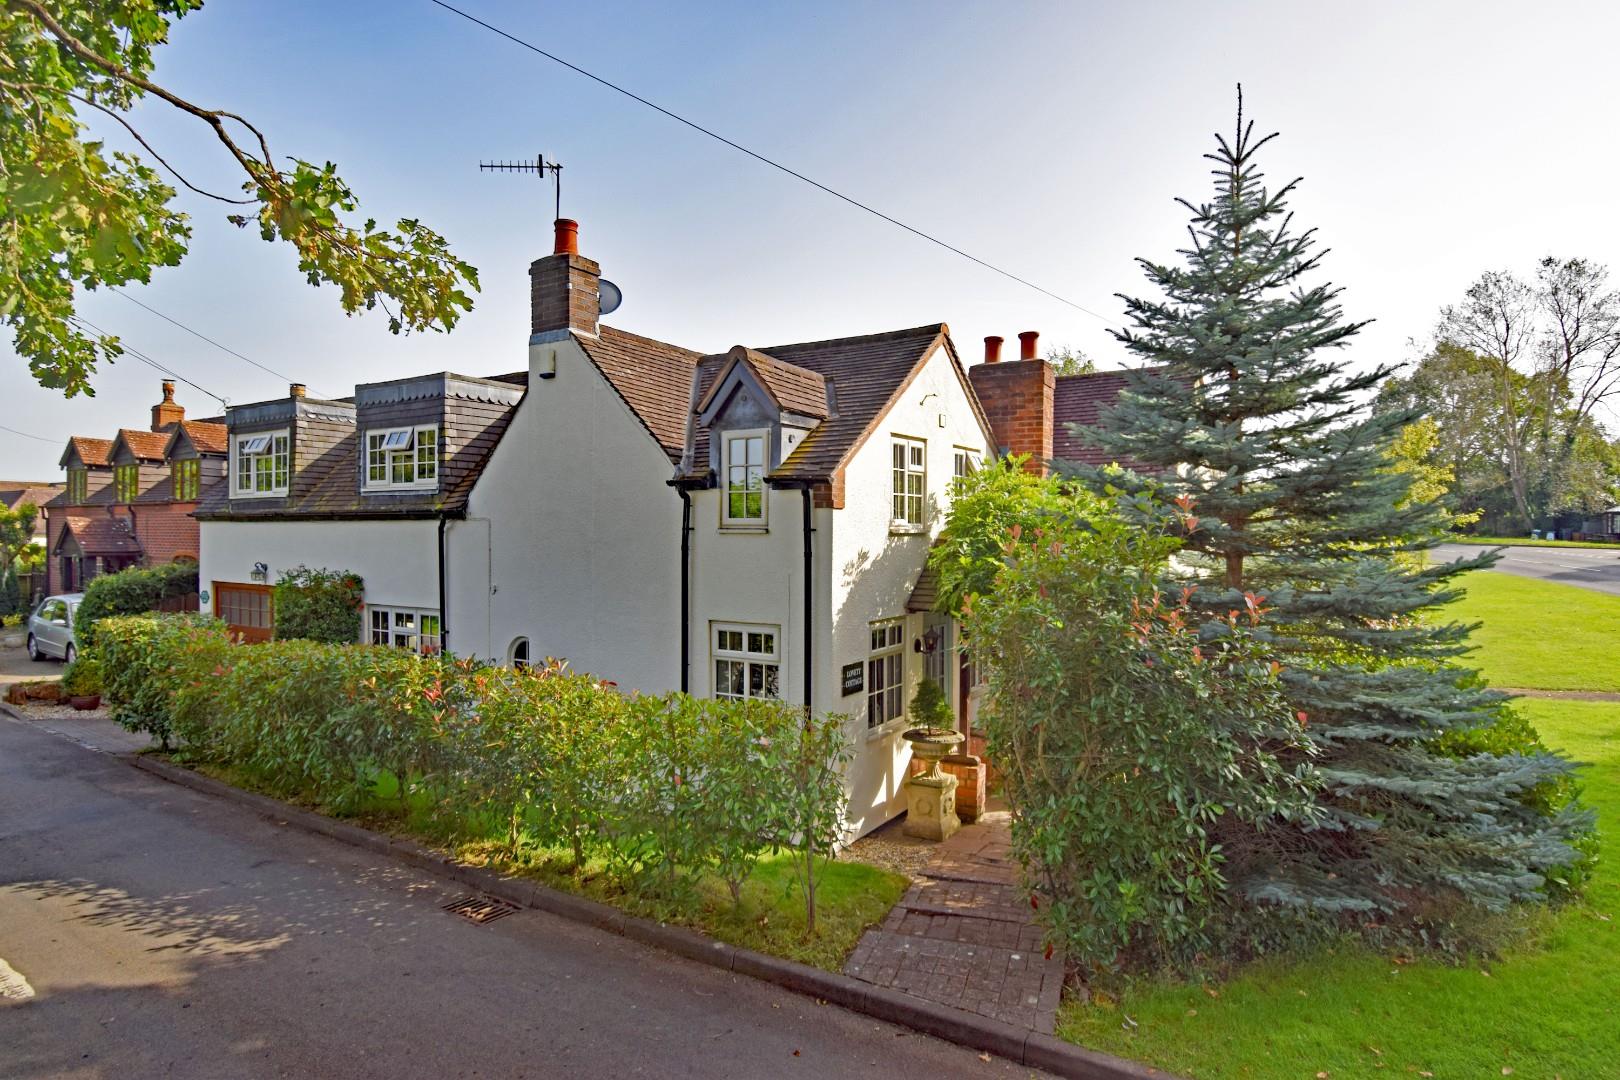 Lovett Cottage, Addis Lane, Cutnall Green, Worcestershire, WR9 0NE